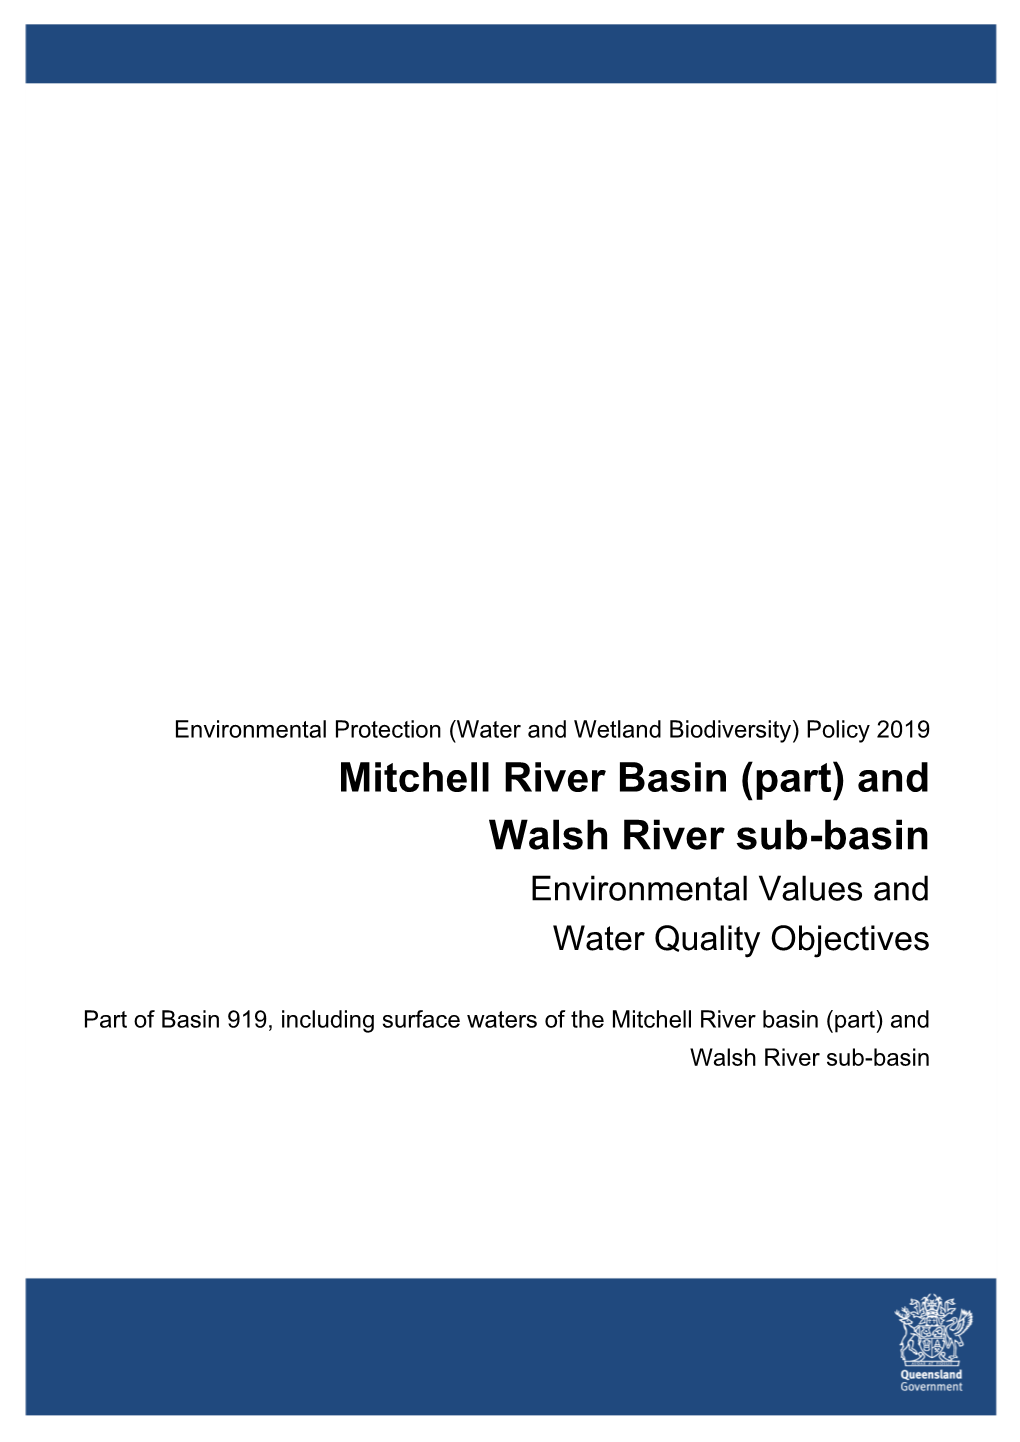 Mitchell River Basin (Part) and Walsh River Sub-Basin